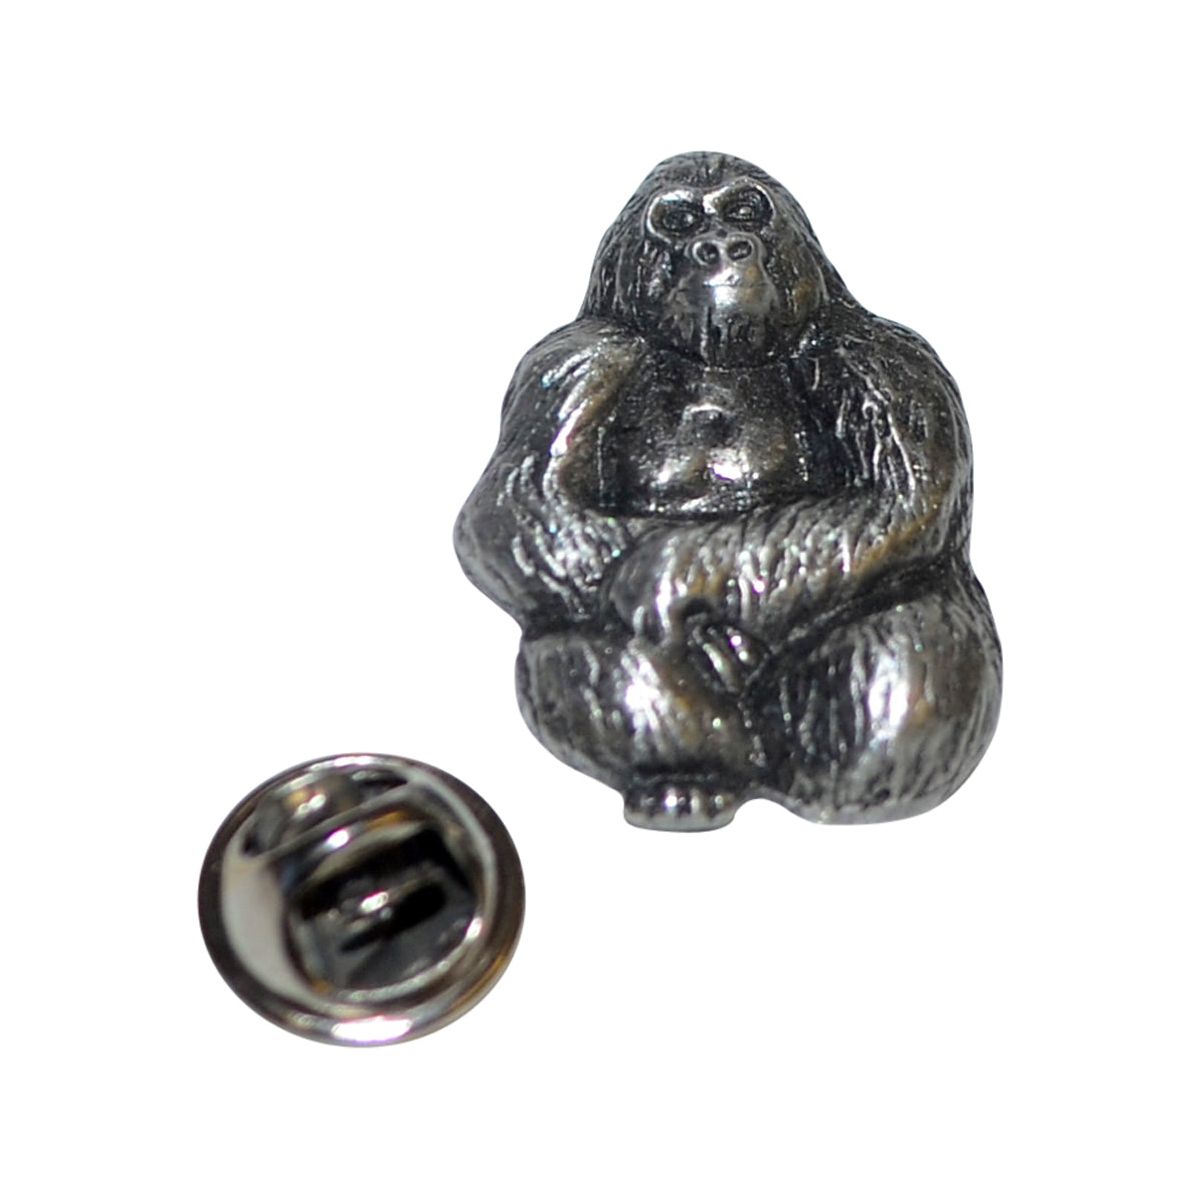 Gorilla Ape Monkey Lapel Pin Badge In British Pewter - Ashton and Finch